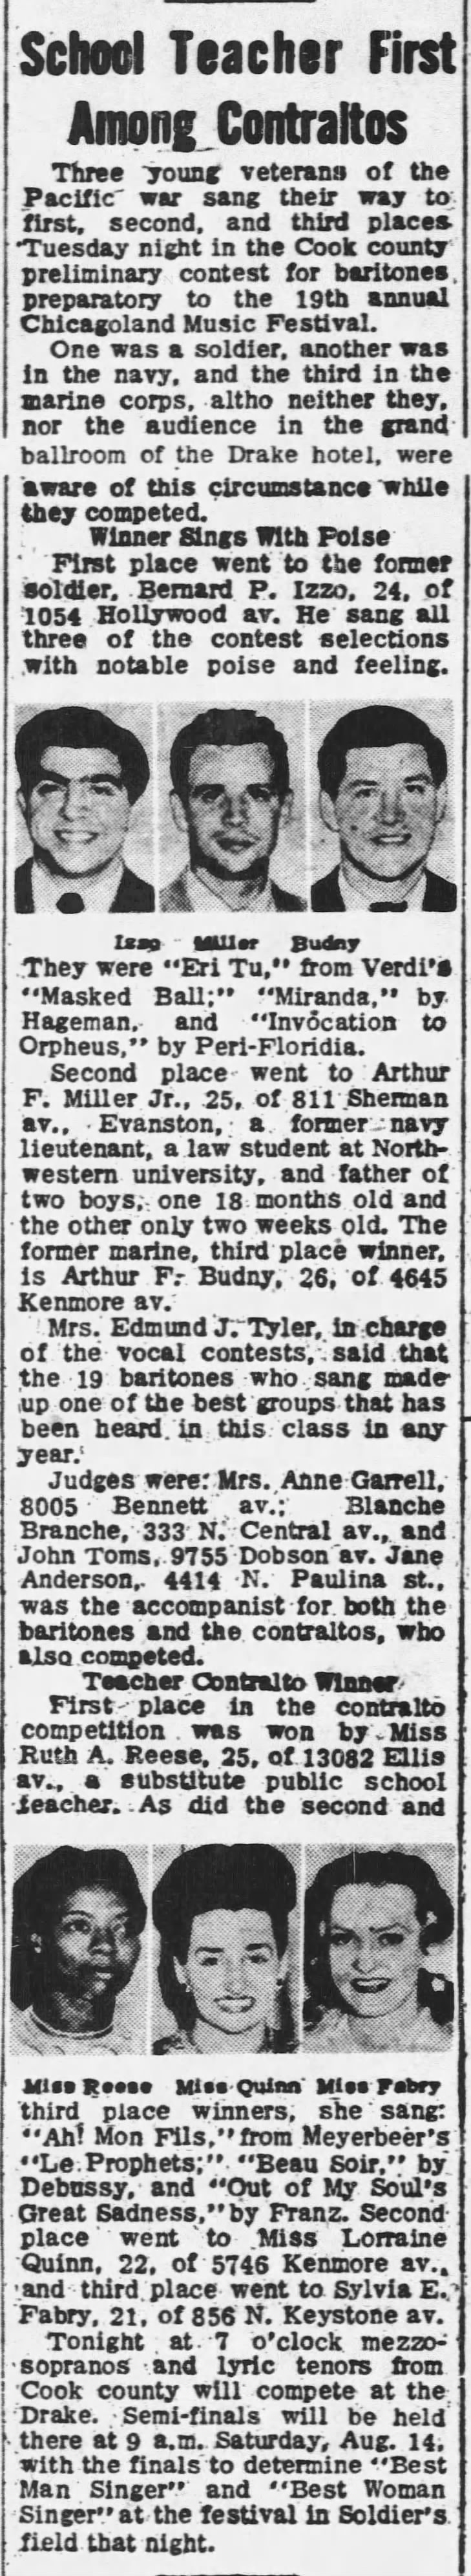 School Teacher First Among Contraltos. The Chicago Tribune (Chicago, Illinois) 22 July 1948, p 19